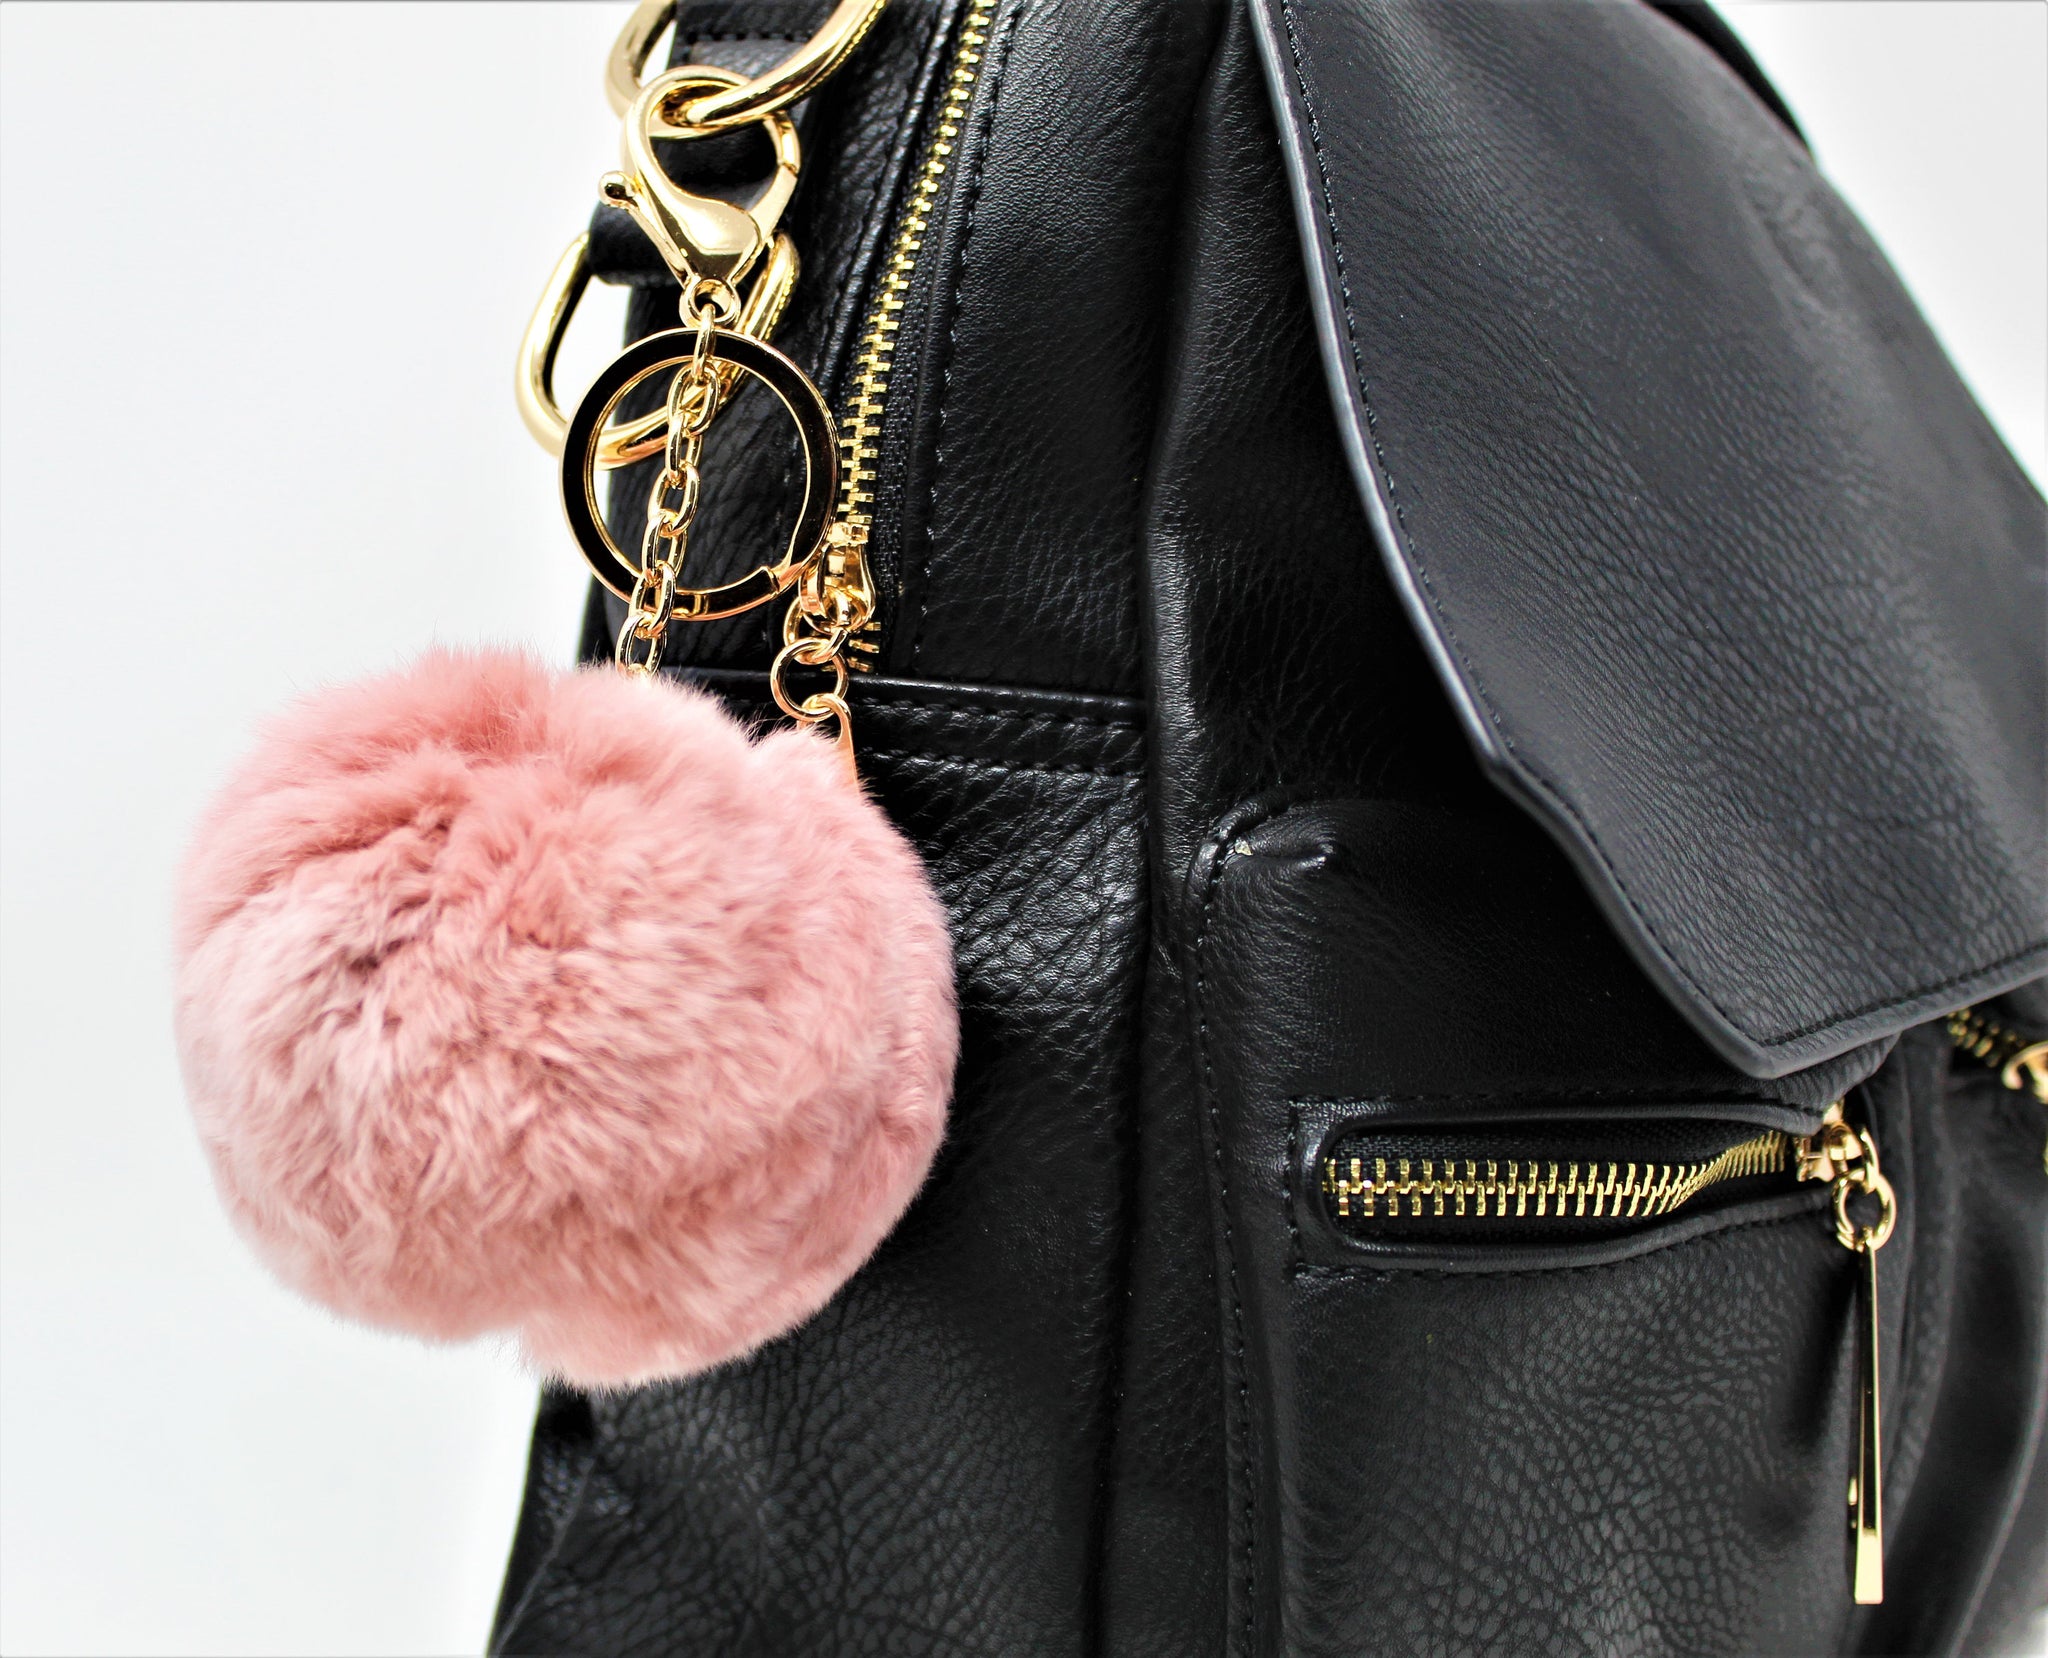 Framendino, Animal Pom Pom Keychain Cute Keychain Ball for Girls Women Bag  Accessories